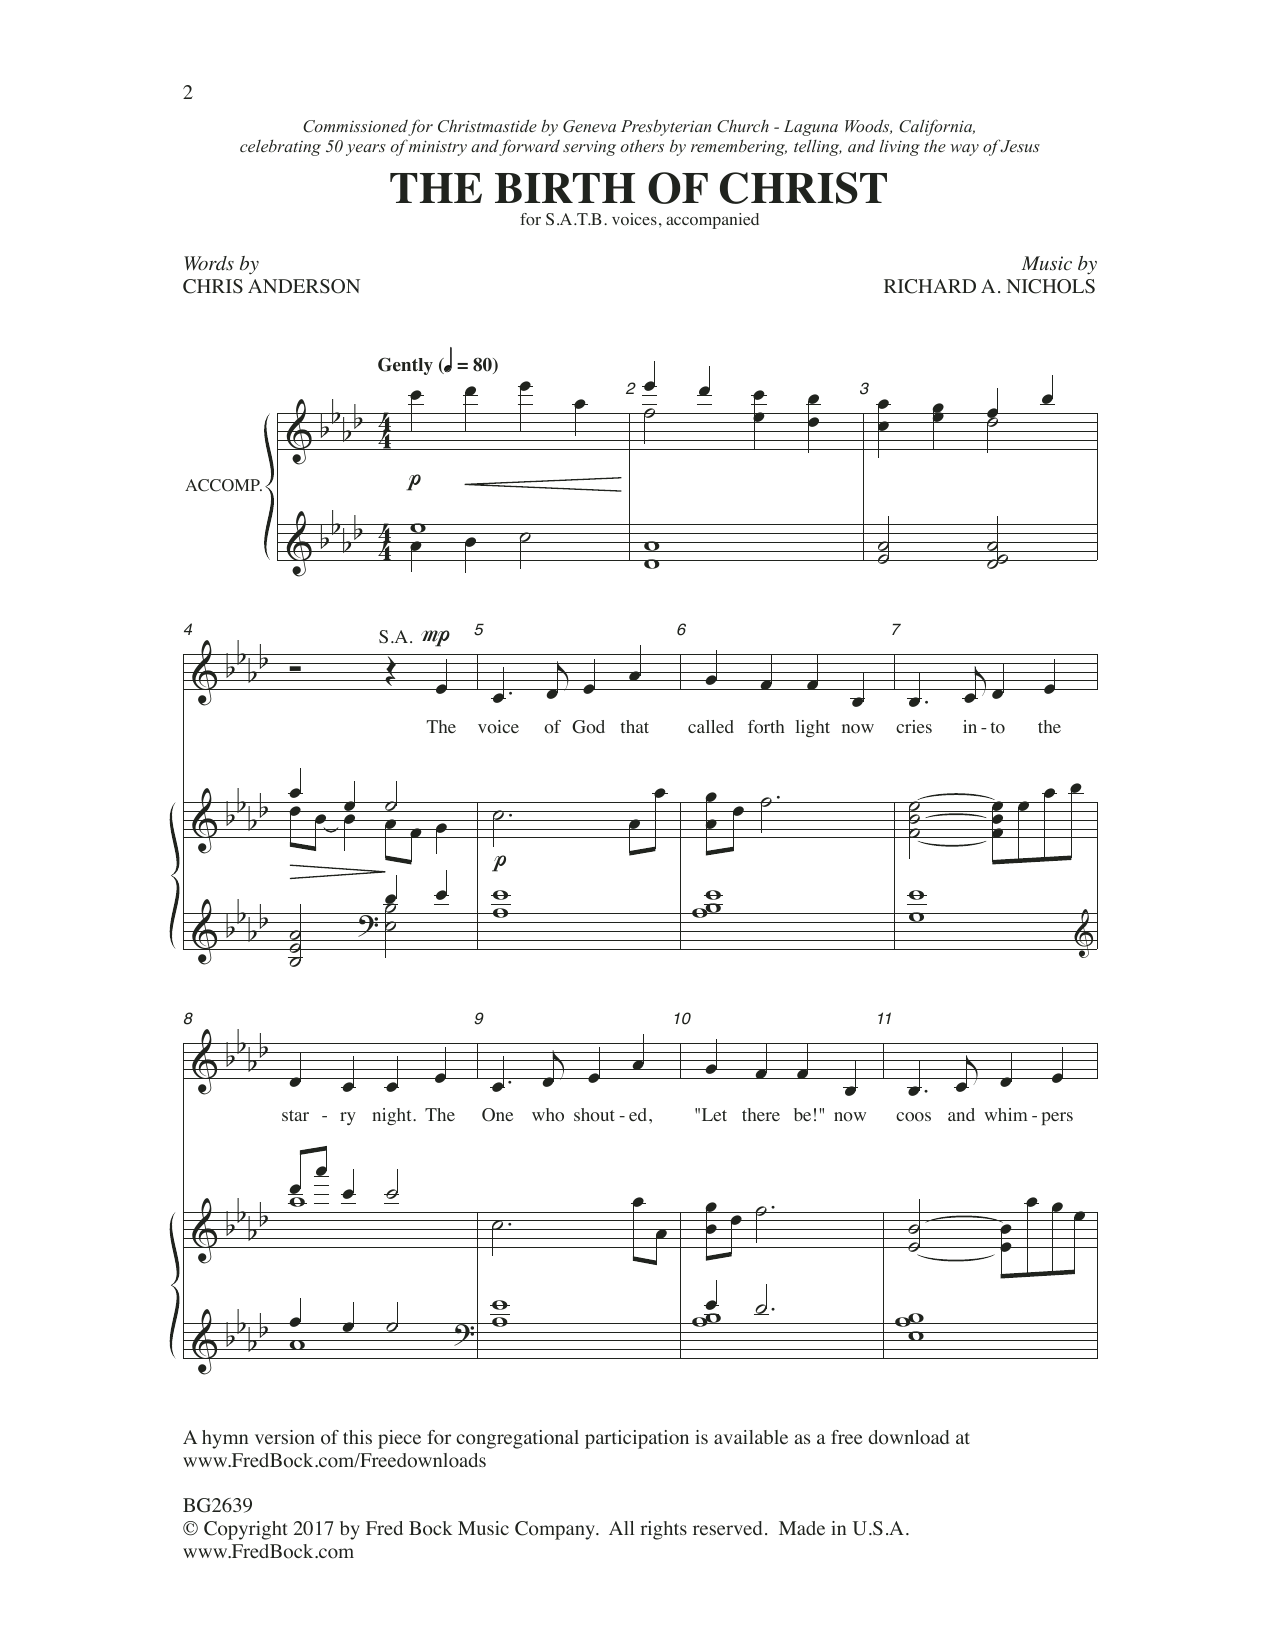 The Birth of Christ sheet music